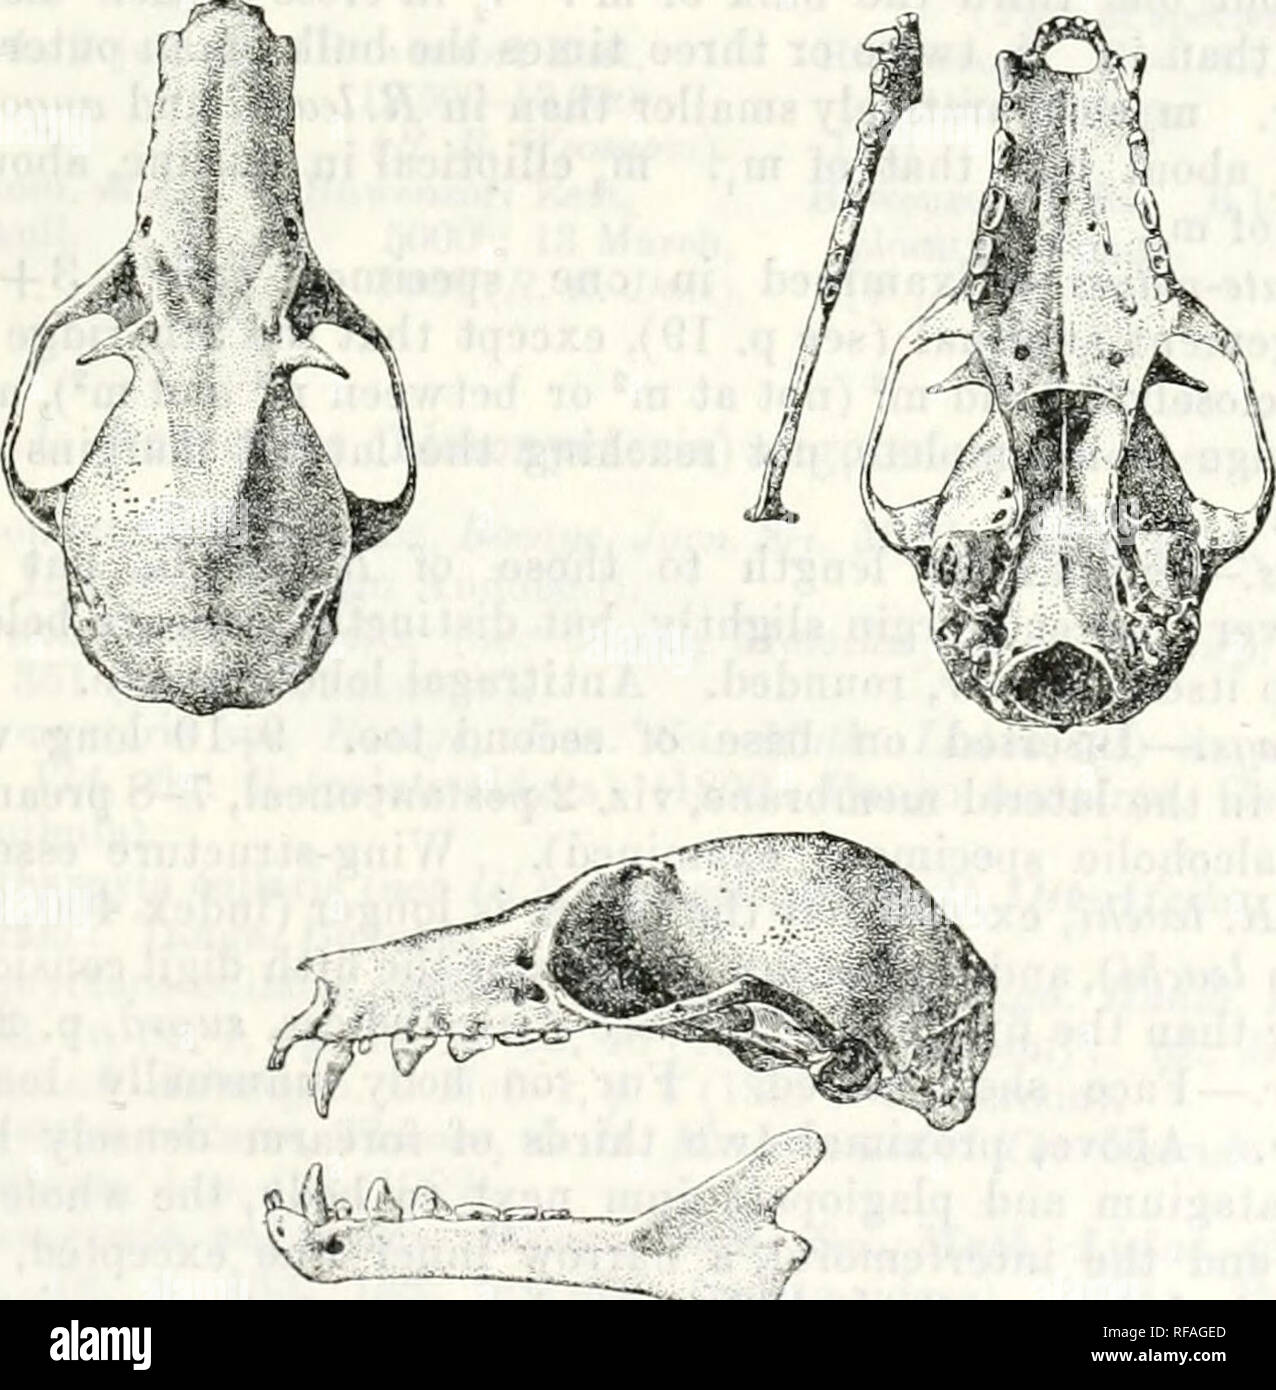 . Catalogue des chiroptères dans la collection de la ... Musée. ROrSETTUS LANOSUS. 49 10. (Ronsettiis Stenonycteris) lanosus, Thos. Xantharpyia ffigyptiaca (wee Geof.), Horxfield, Cat. Mamm. Mus. E. HID. Co. p. 29 (iSol : l'Abyssinie). Eleutherura ryptiuca-ae (pt.), Gruy, Cat. Monk. Sfc. p. 117 (1870 : l'Abyssinie). Un Cynonvcteris gvptiaca Dohsim ?,, Cat. Chir. B. M. p. 7o, modèle e ^ (1878 : l'Abyssinie). (Cynonyrteris ajsryptiaca Cynopterus) (pt.), TroufSiart, Rév. i)- mai. Znol. (.3) vi. p. 206 (1878) : l'Abyssinie. lioiisettus yptiacus-peo (pt.), Trouessart, Cat. Mainin., Dellach 64/2. p. rendez (190i : Abyssi Banque D'Images